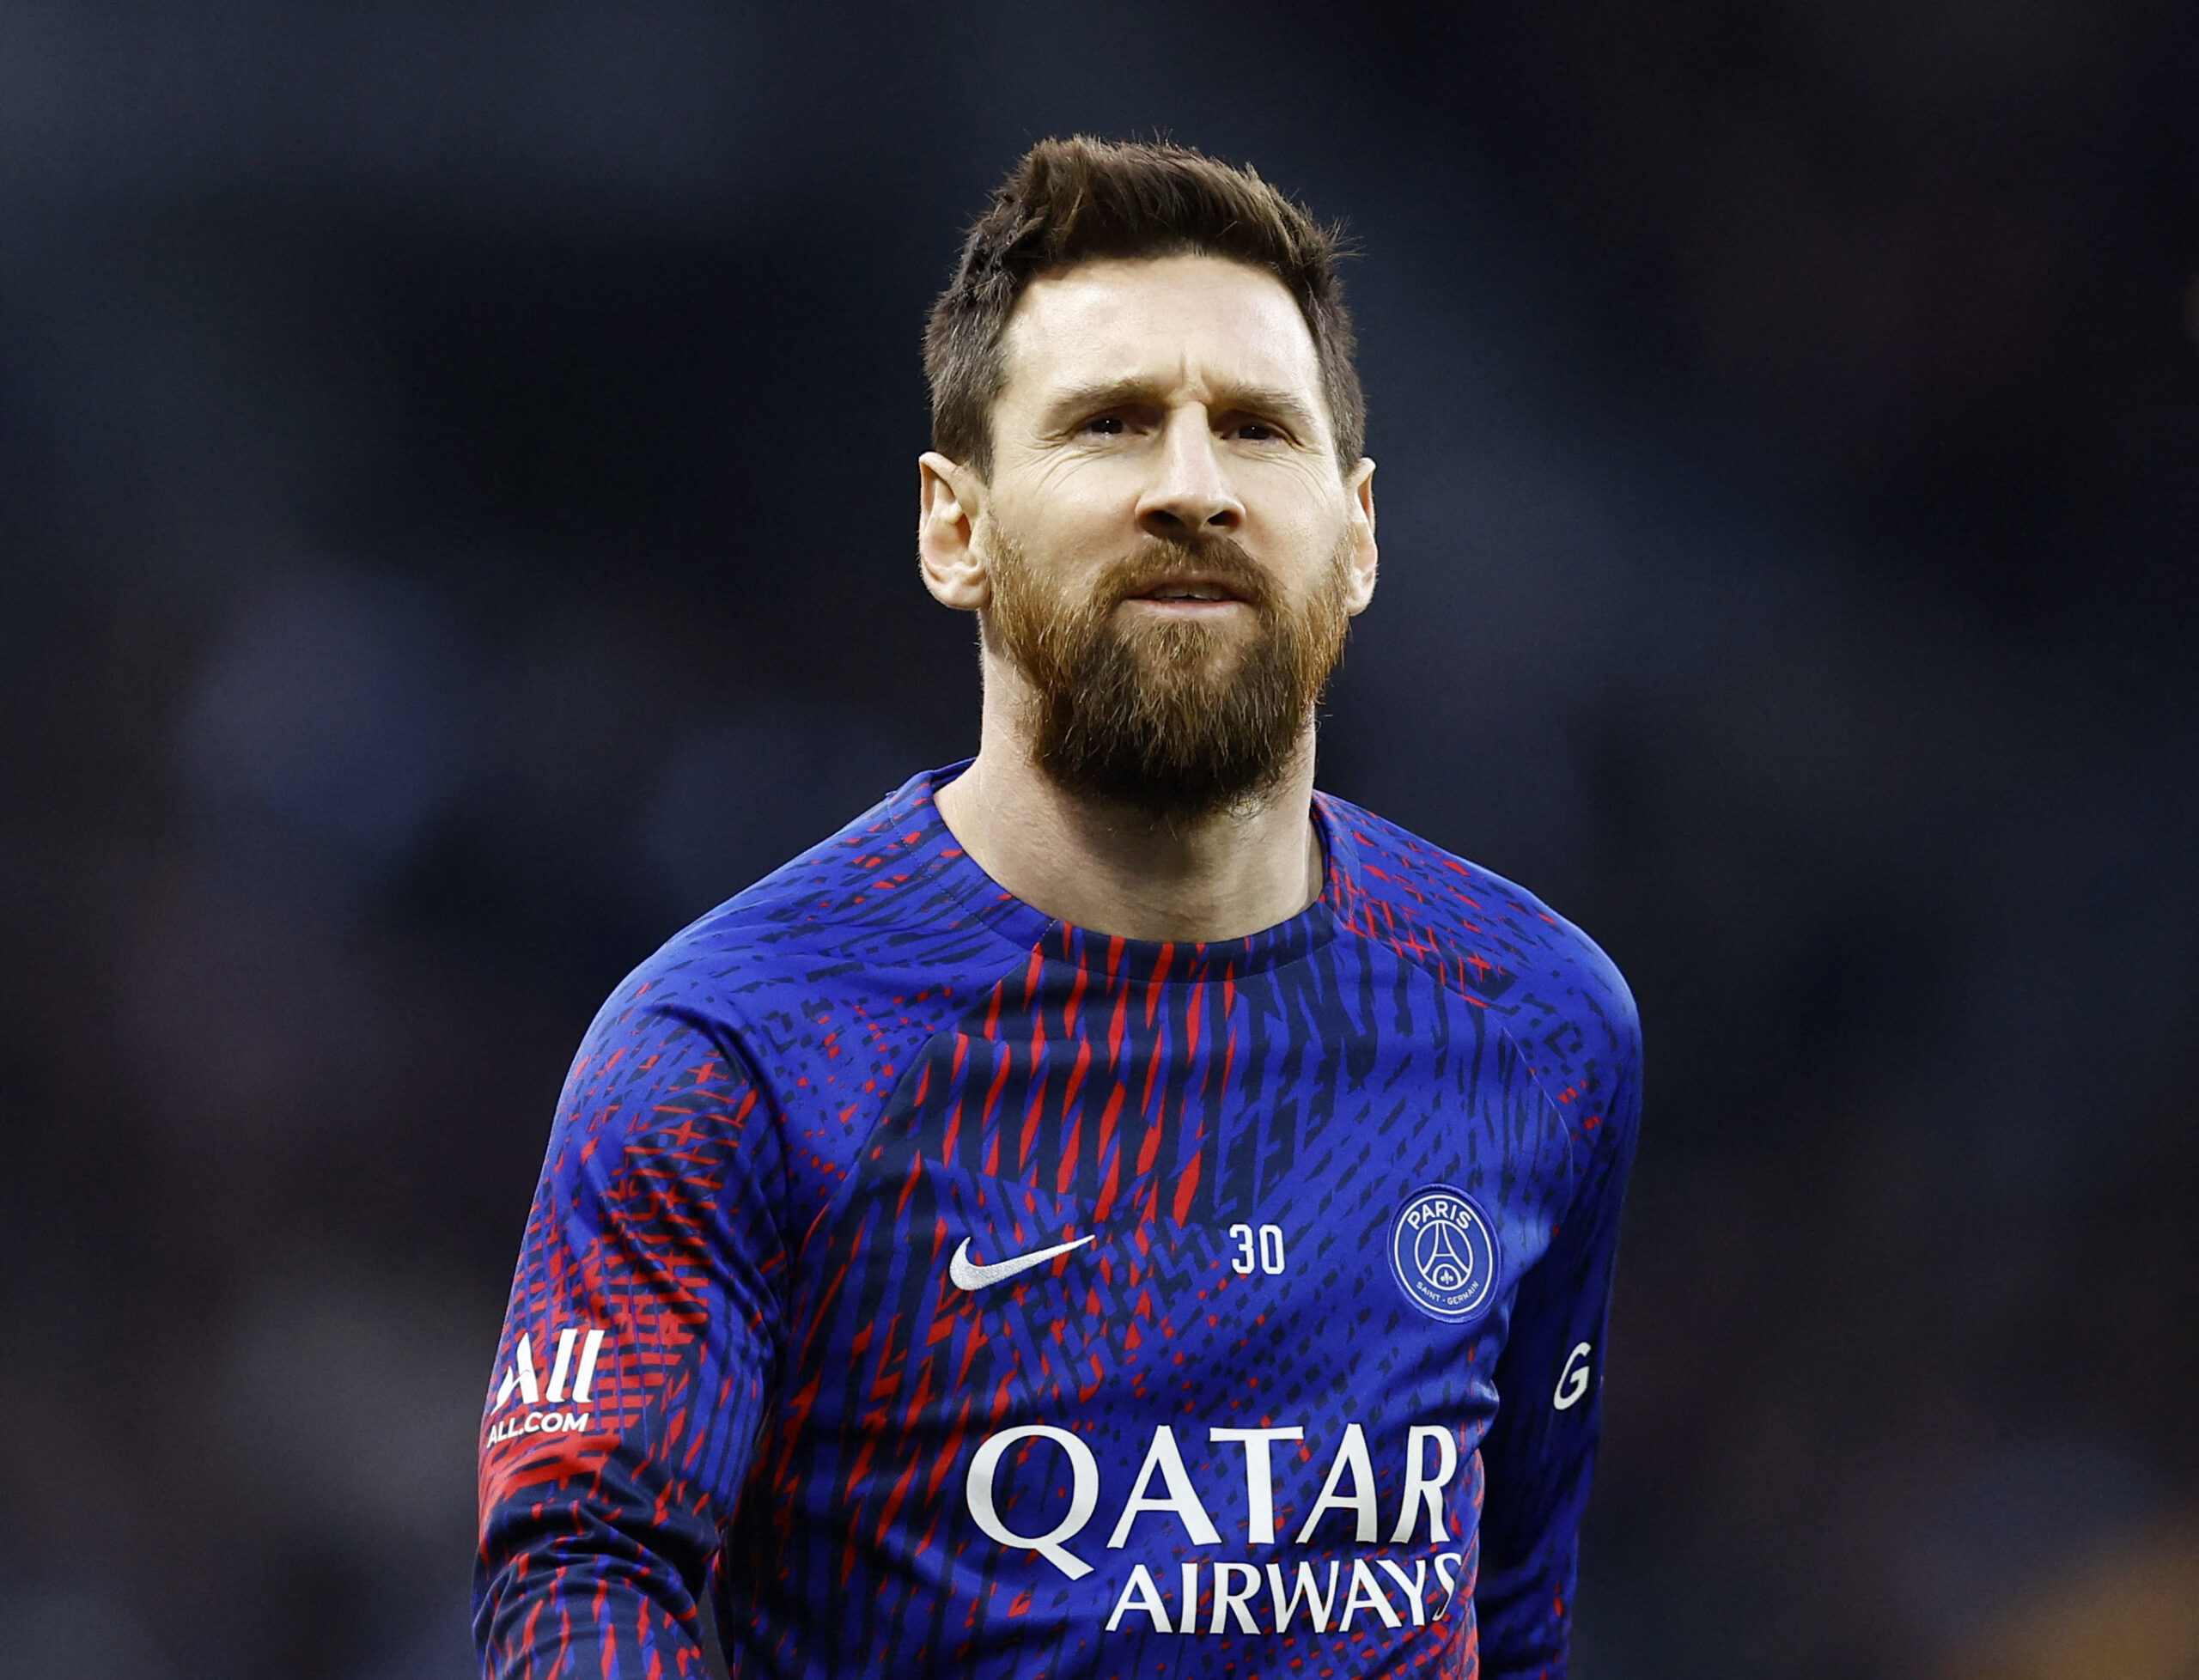 Lionel Messi ‘expected to leave Paris Saint-Germain this summer’